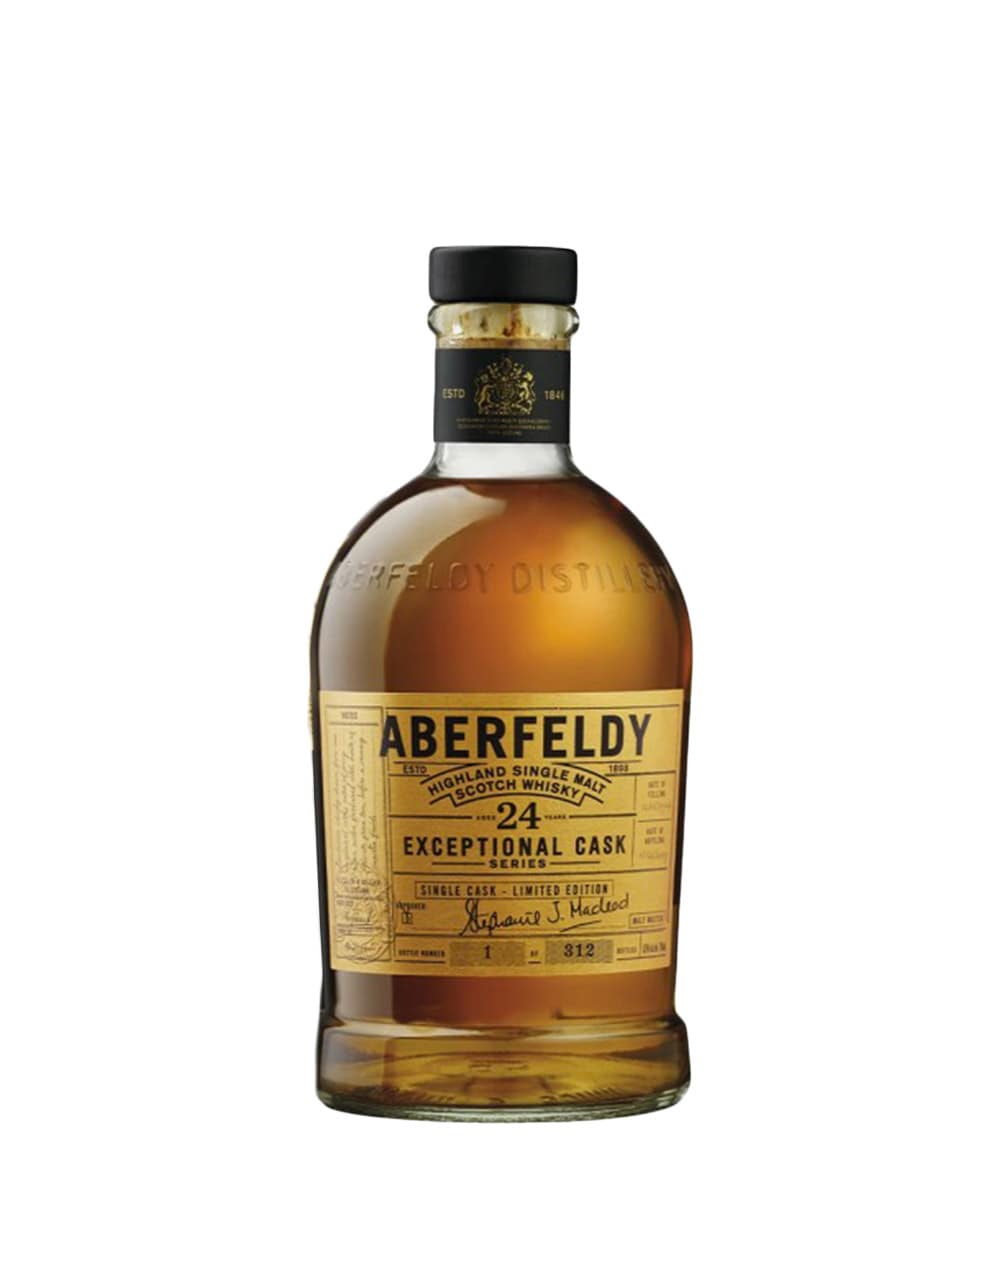 Aberfeldy 24 year old Exceptional Cask Small Batch Highland Single Malt Scotch Whisky